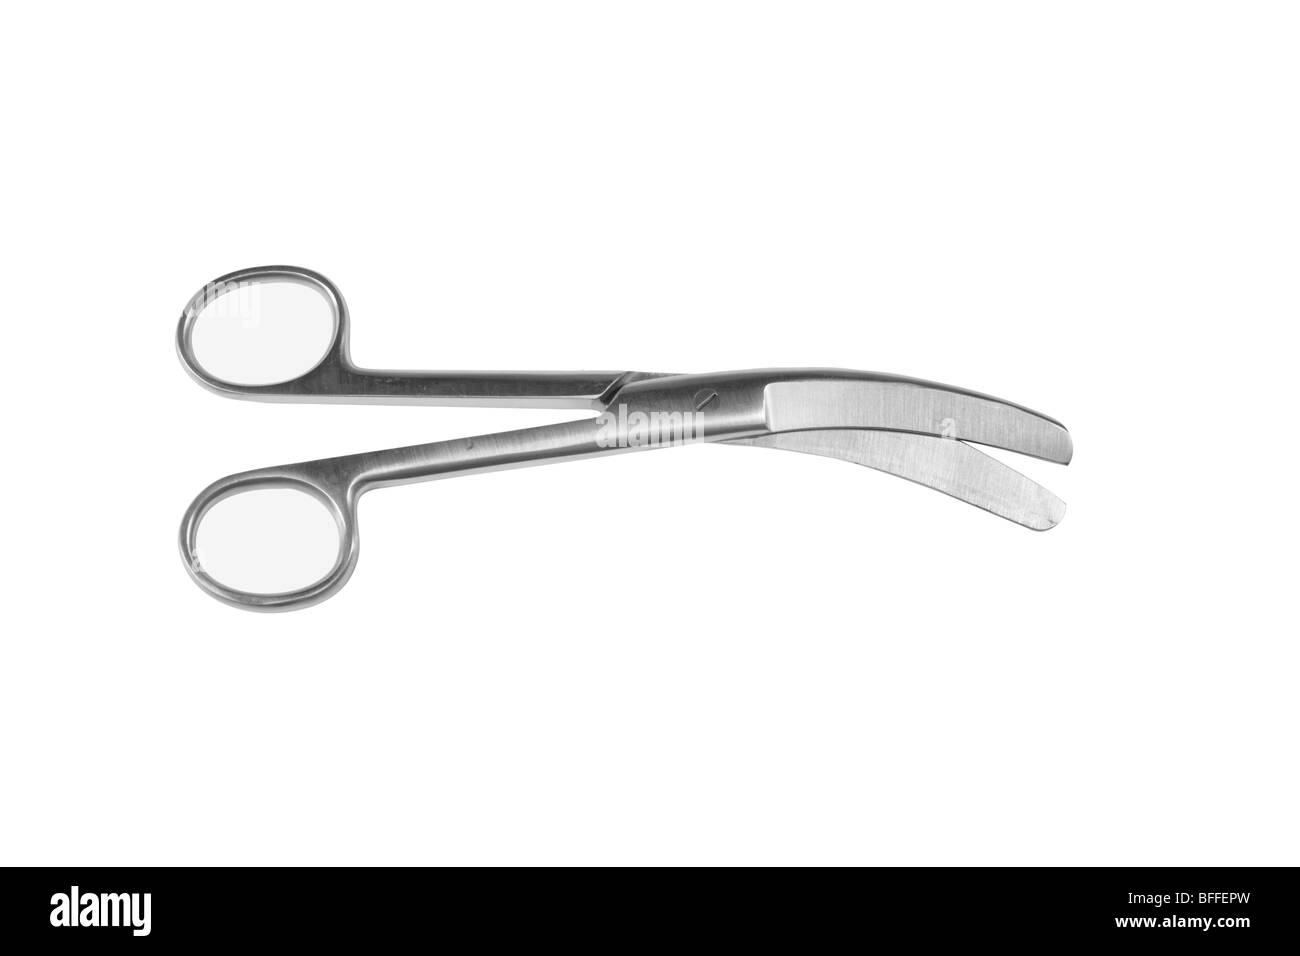 Mayo scissors Black and White Stock Photos & Images - Alamy